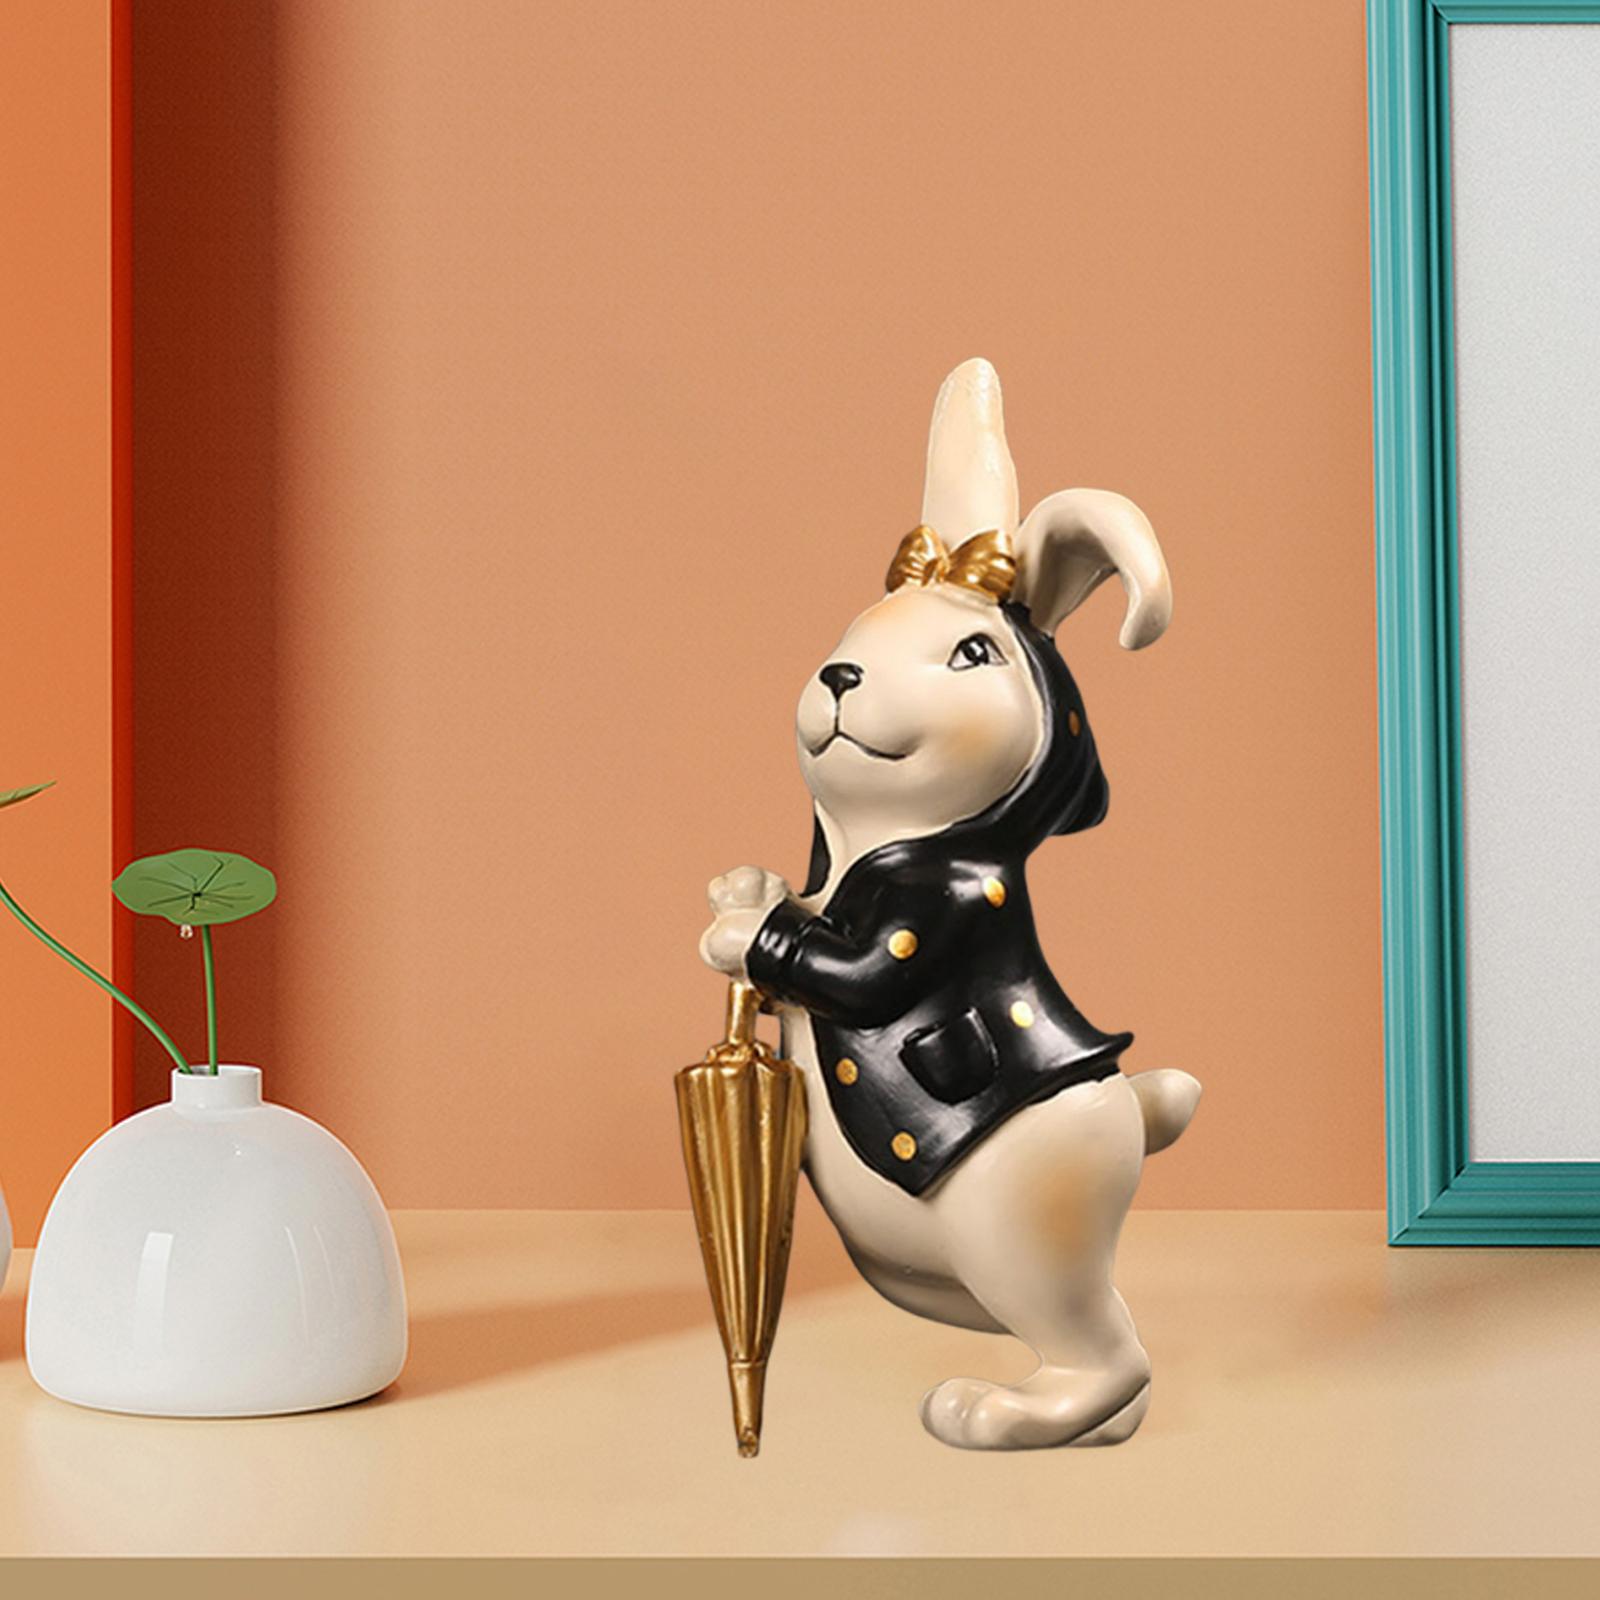 Rabbit Model Desktop Ornaments Gifts for Wedding Porch Friends Single Bunny 